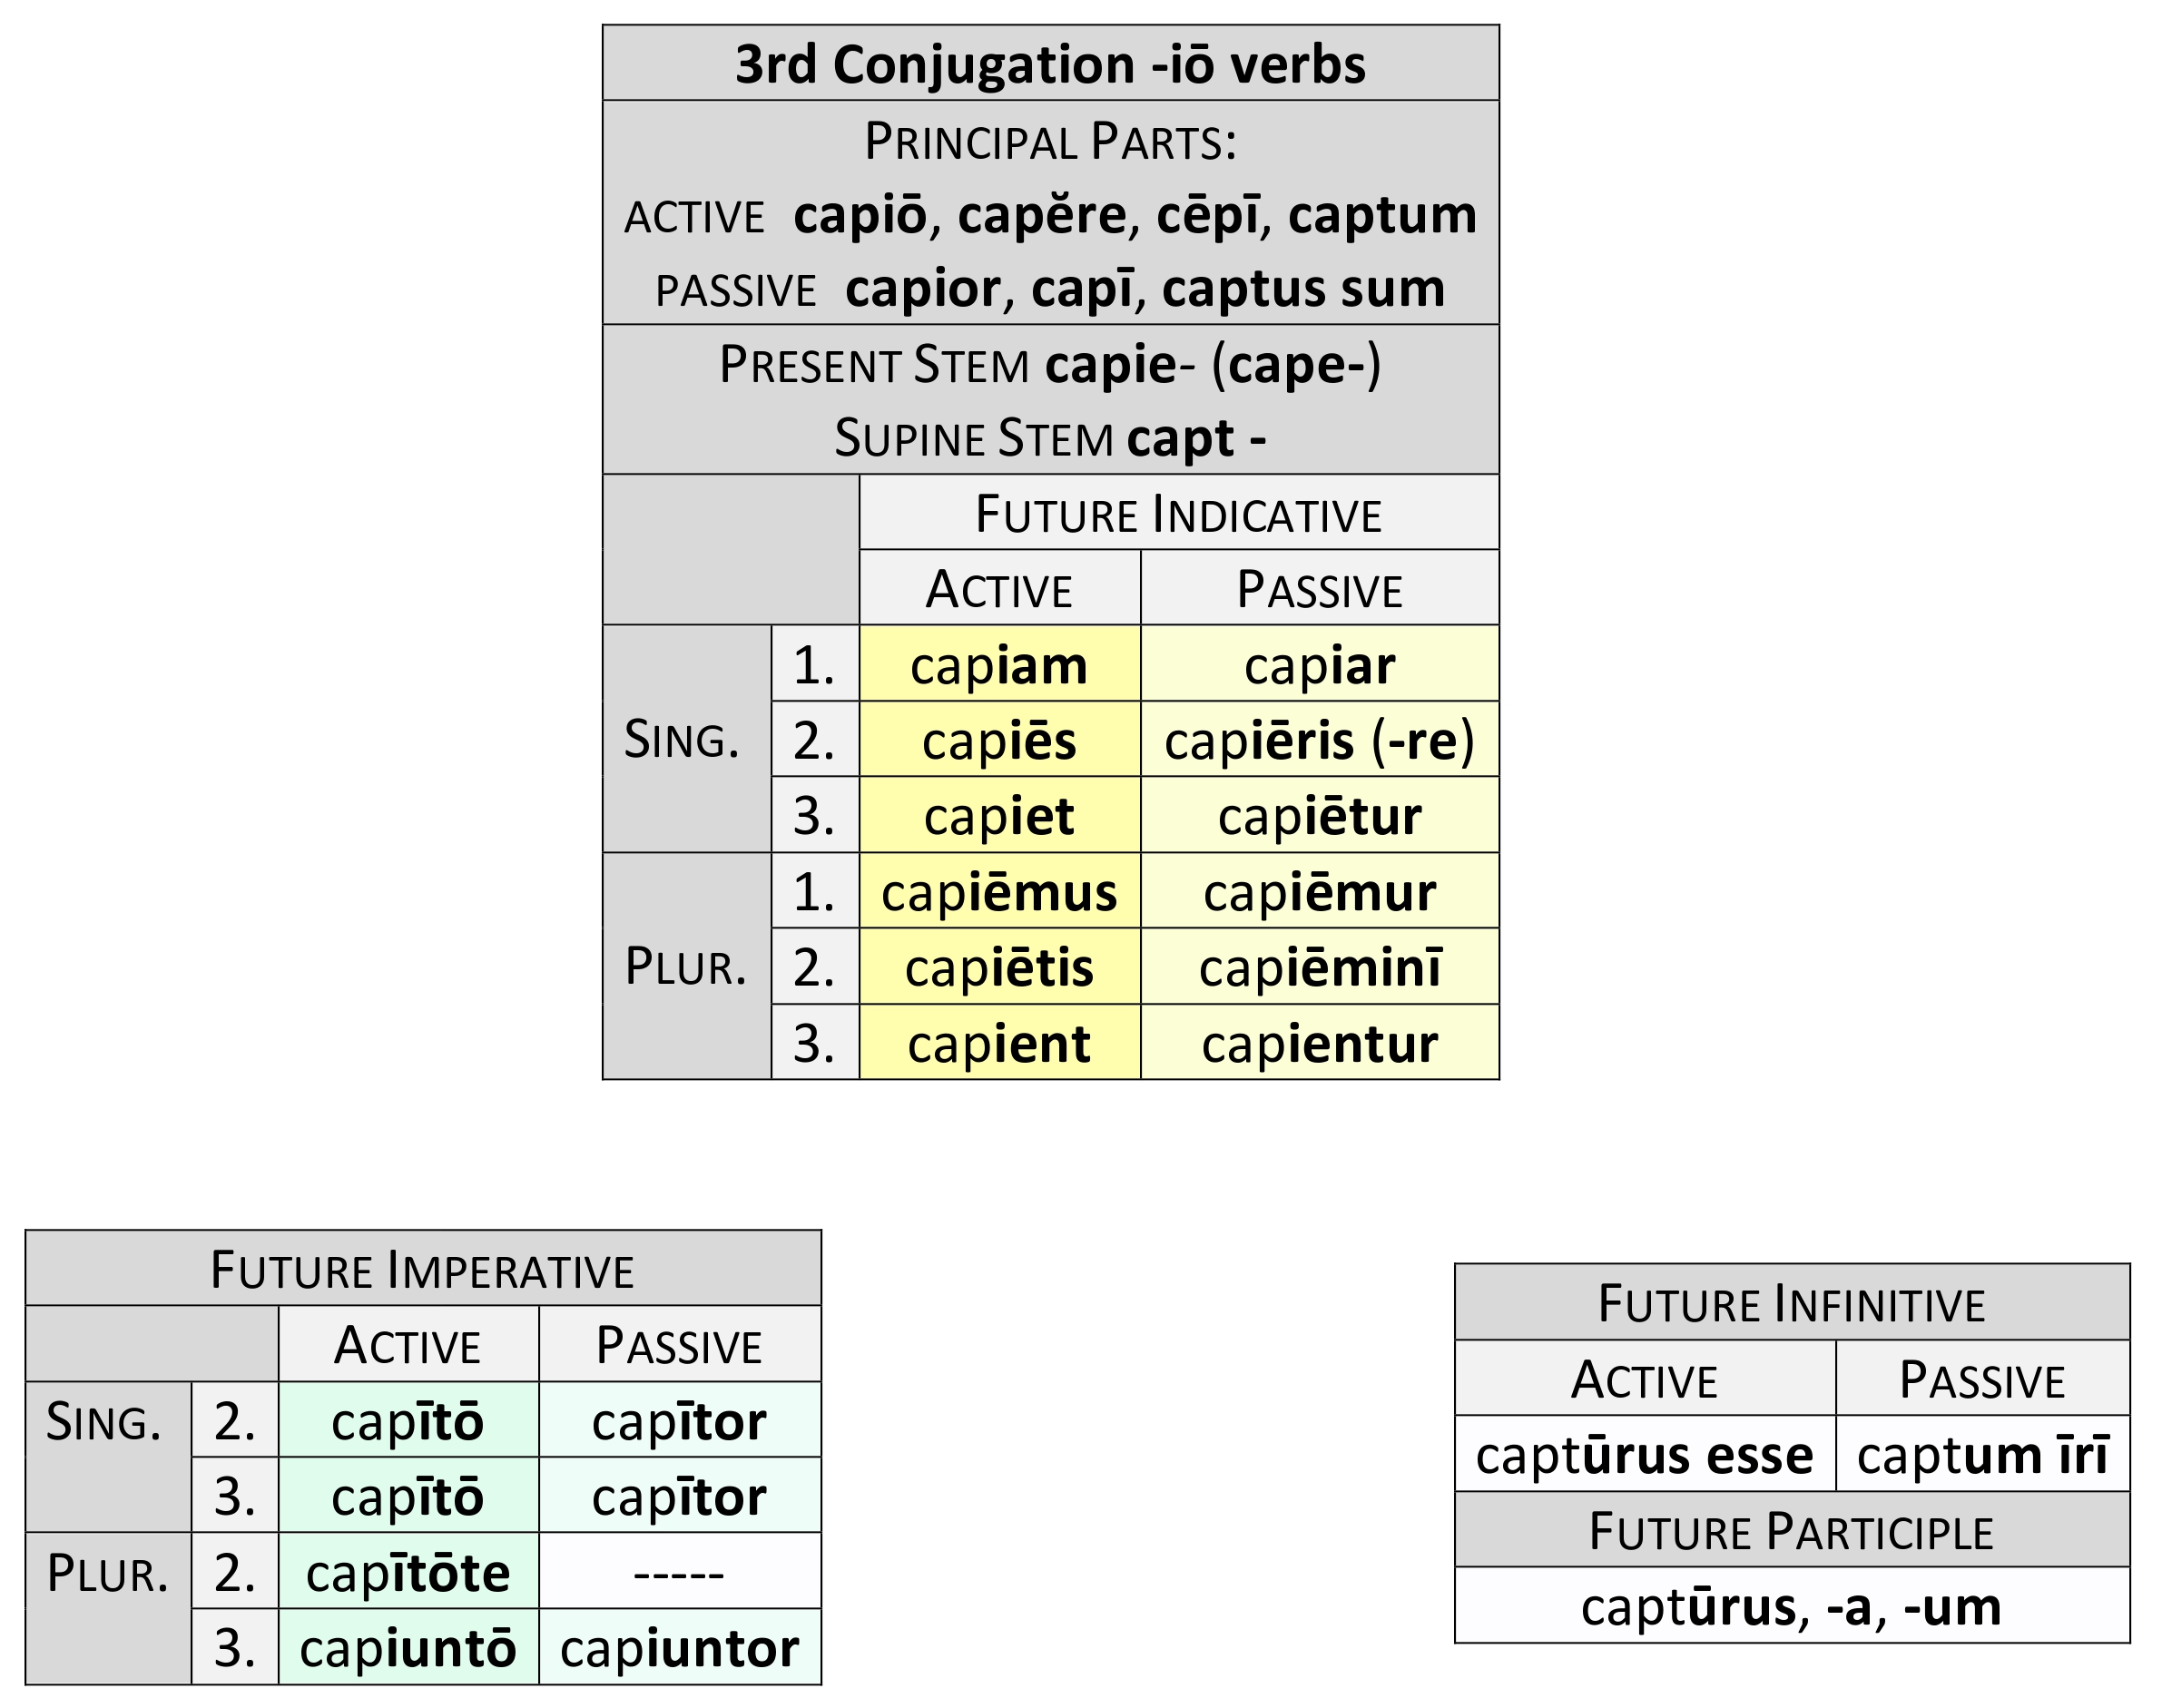 3rd Conjugation in -iō Future paradigm